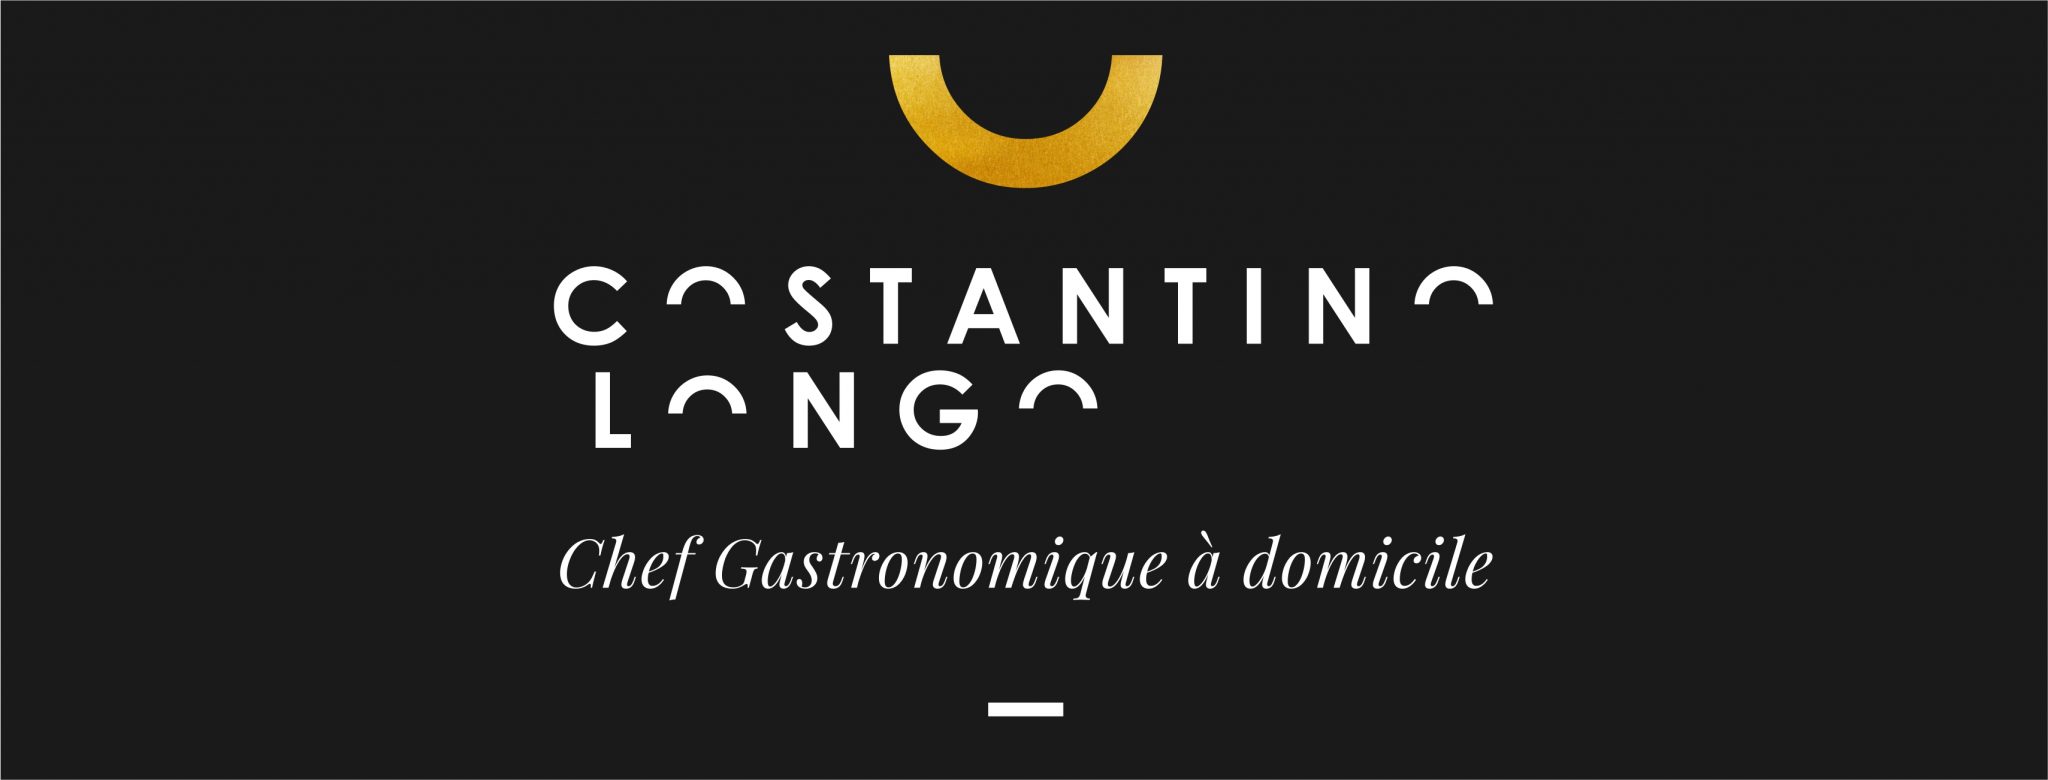 Costantino Longo – Chef Gastronomique à domicile